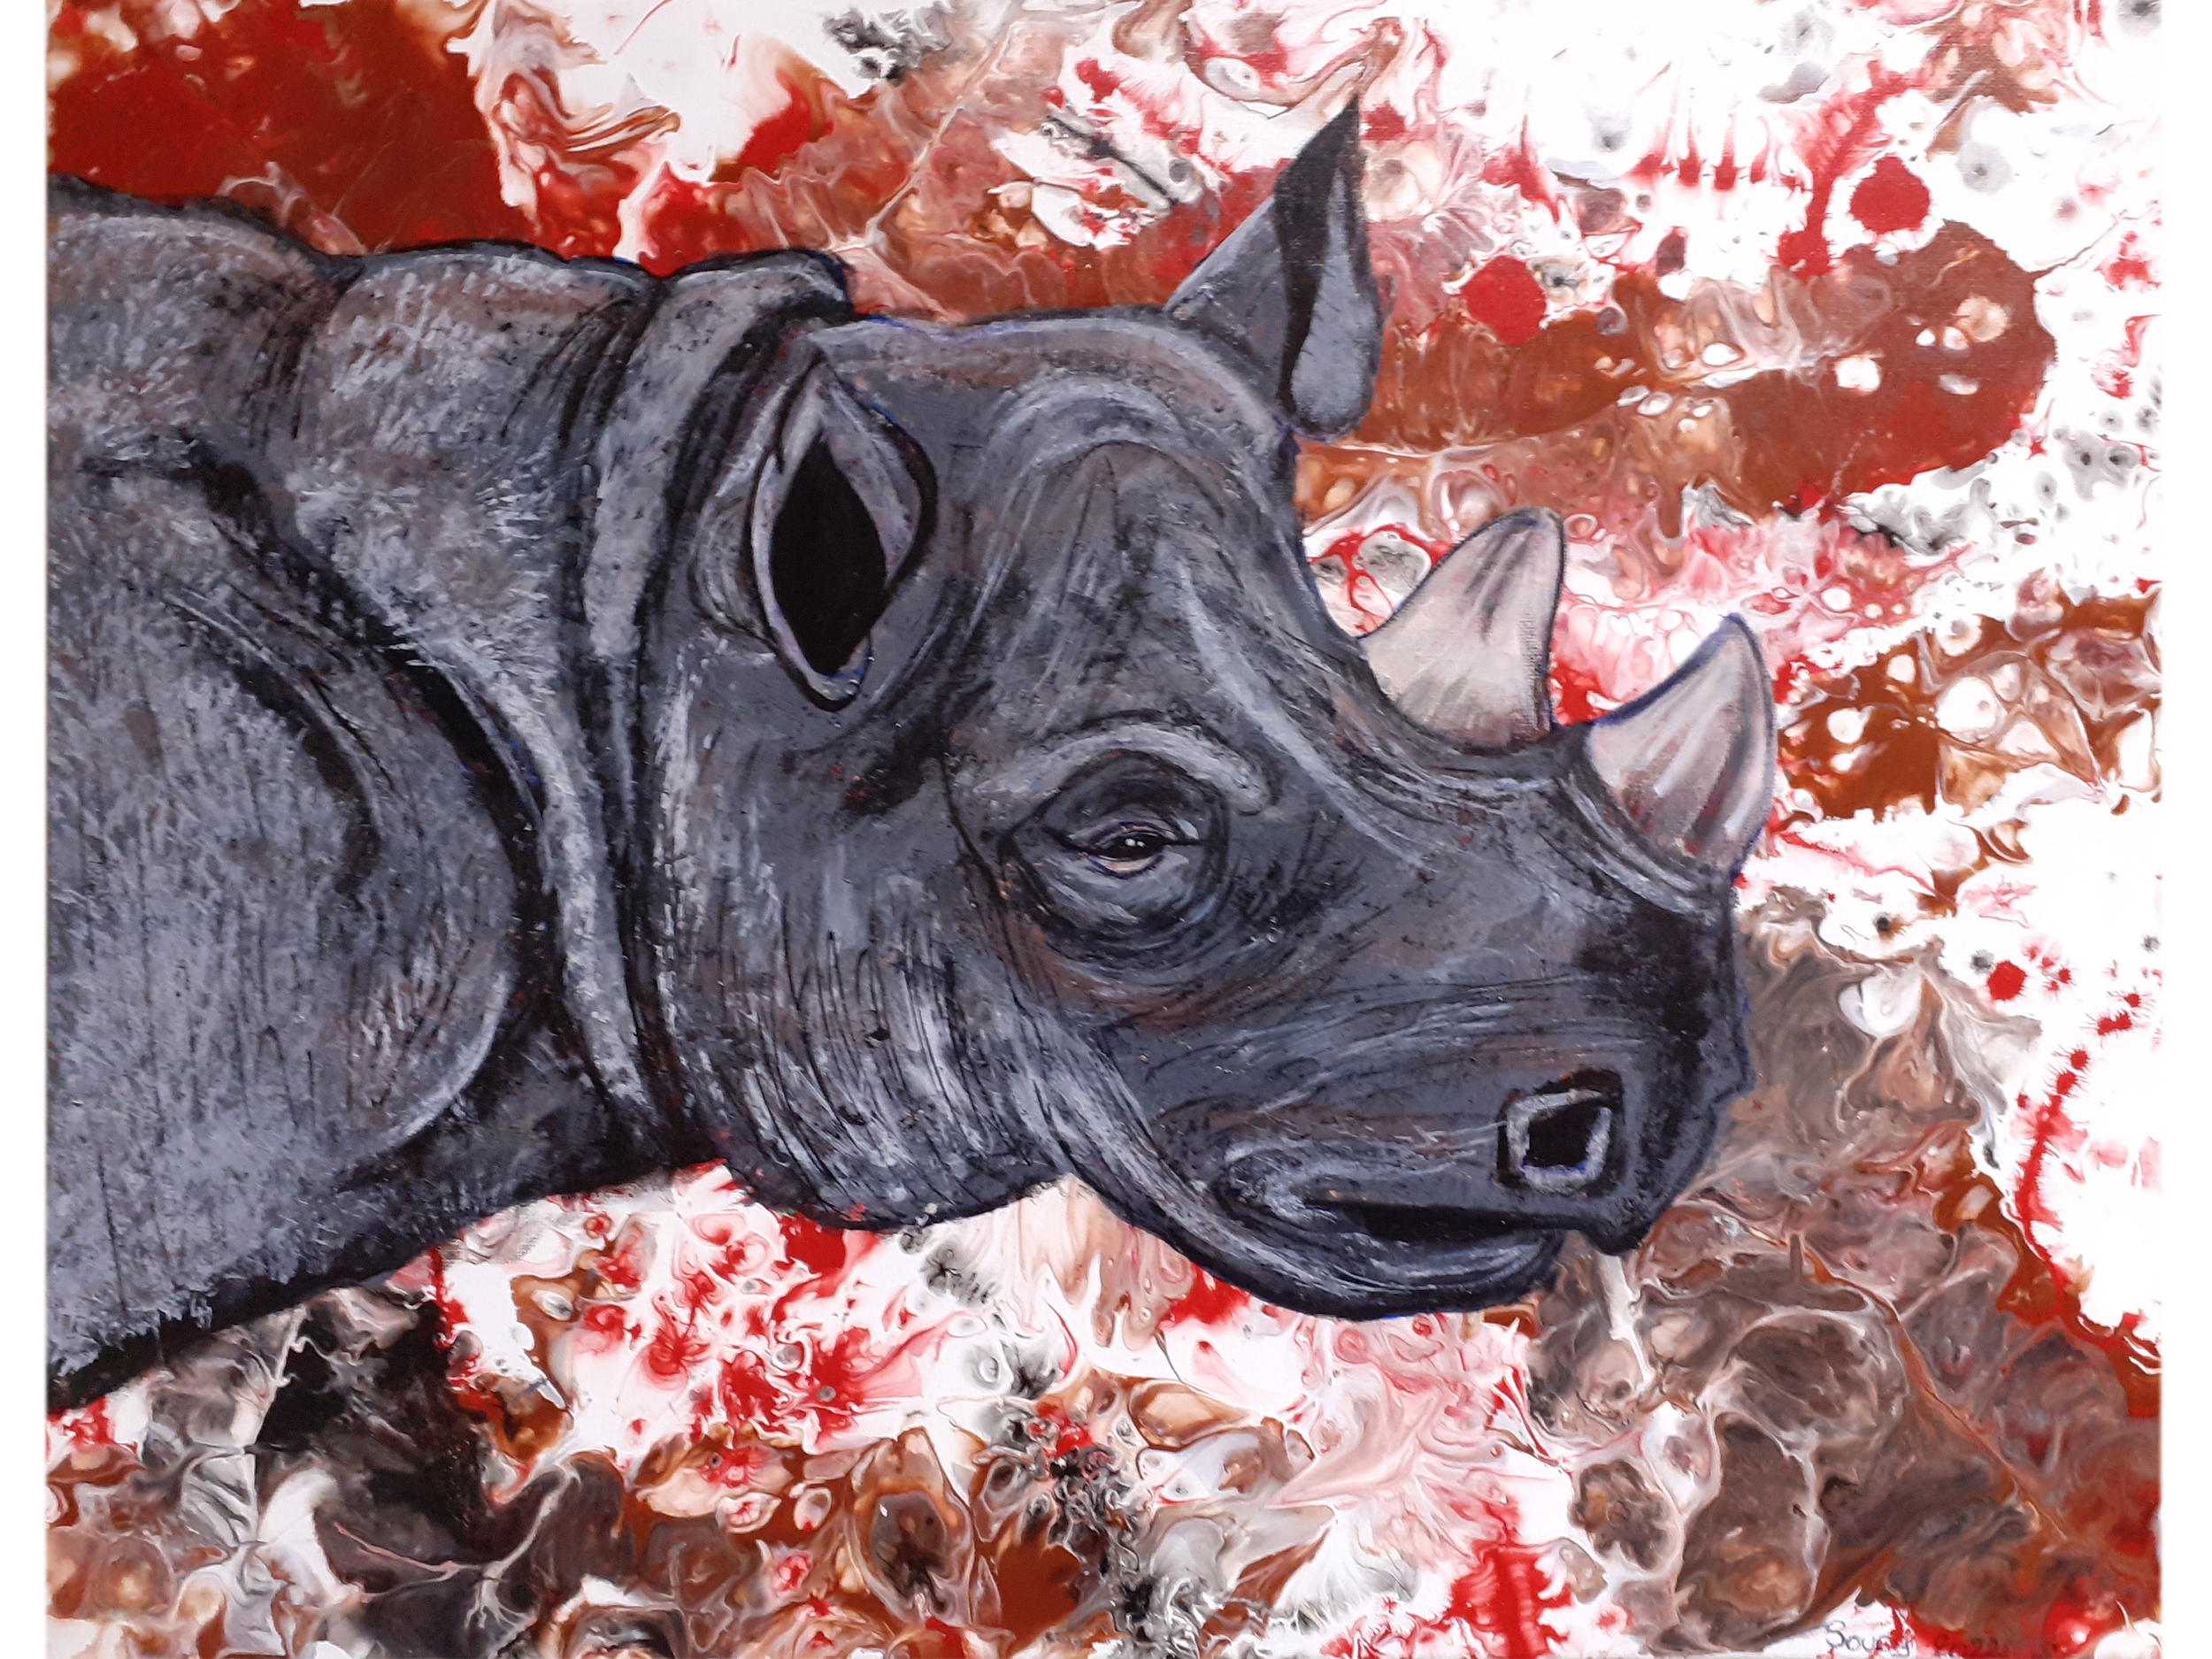 Rhinocéros 1